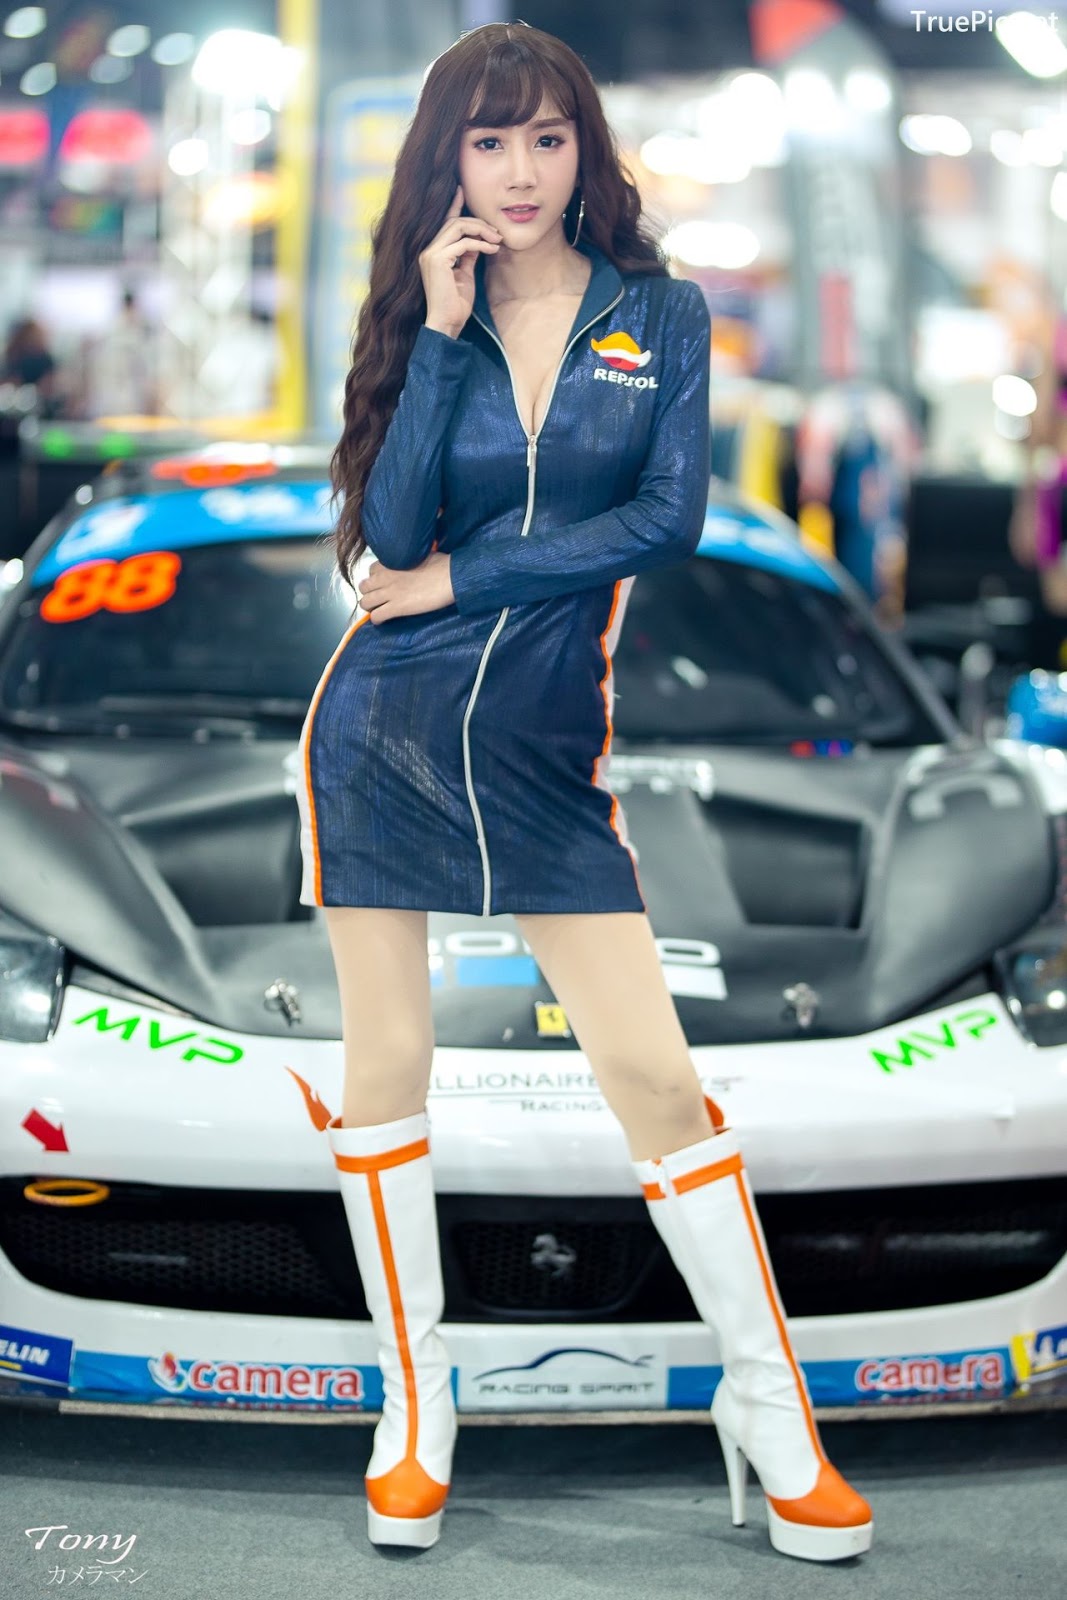 Image-Thailand-Hot-Model-Thai-Racing-Girl-At-Bangkok-Auto-Salon-2019-TruePic.net- Picture-46